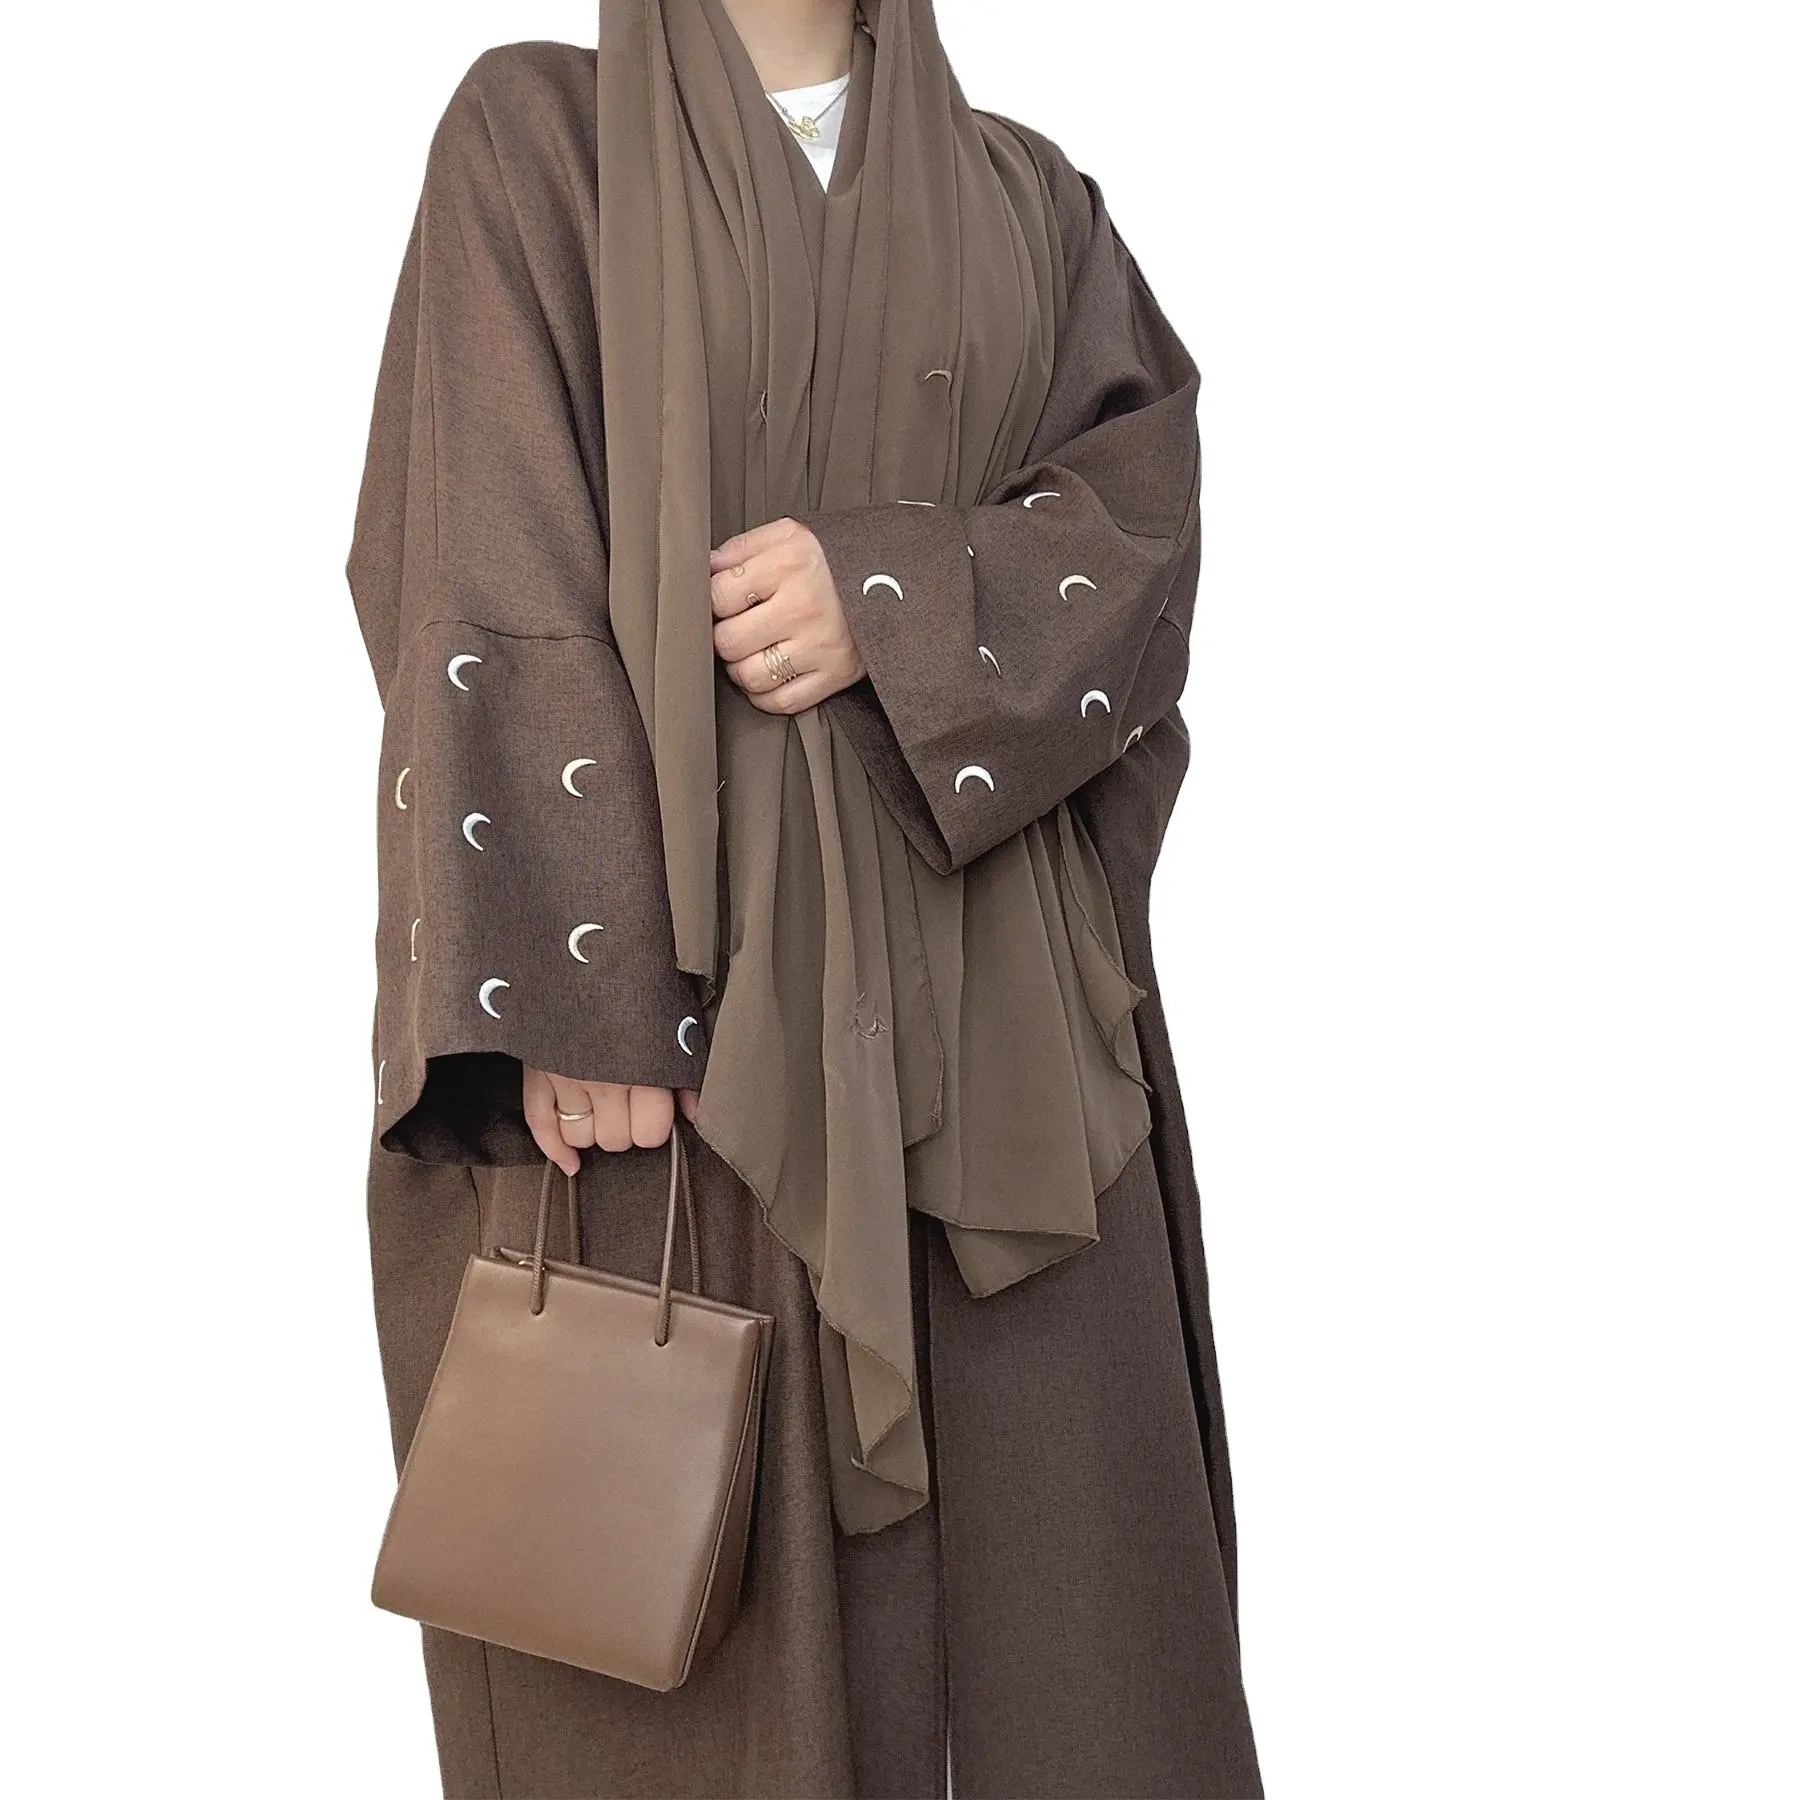 DLR327卸売中東女性ドレス無地長袖イスラム服控えめな着物プラスサイズイスラム教徒オープンアバヤ